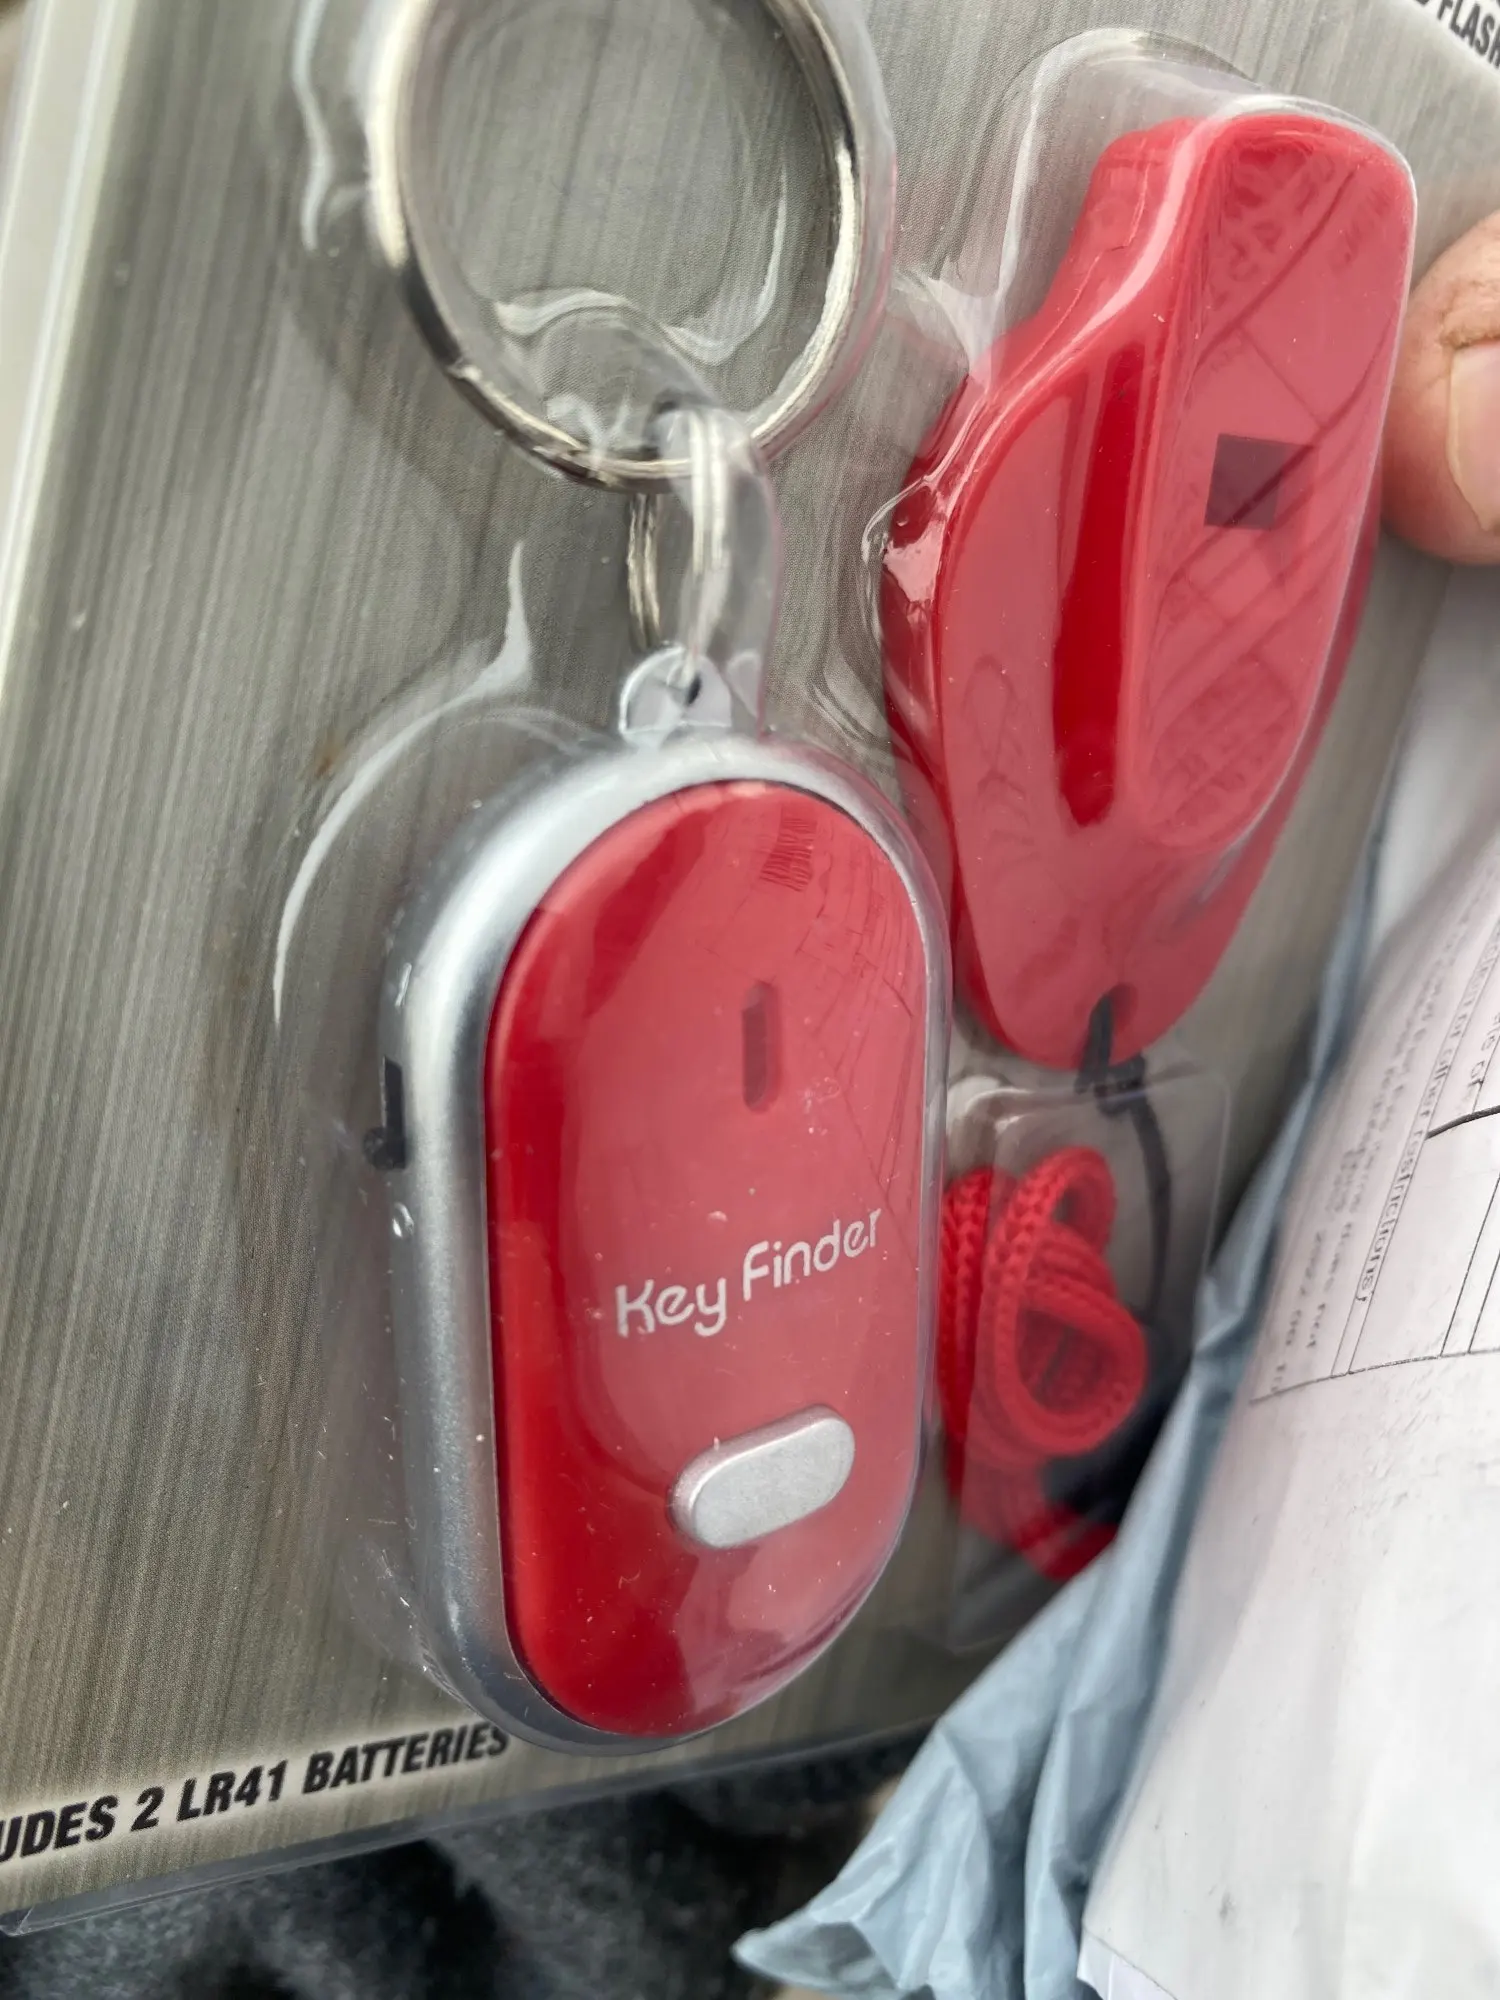 LED Whistle Key Finder Flashing Beeping Sound Control Alarm